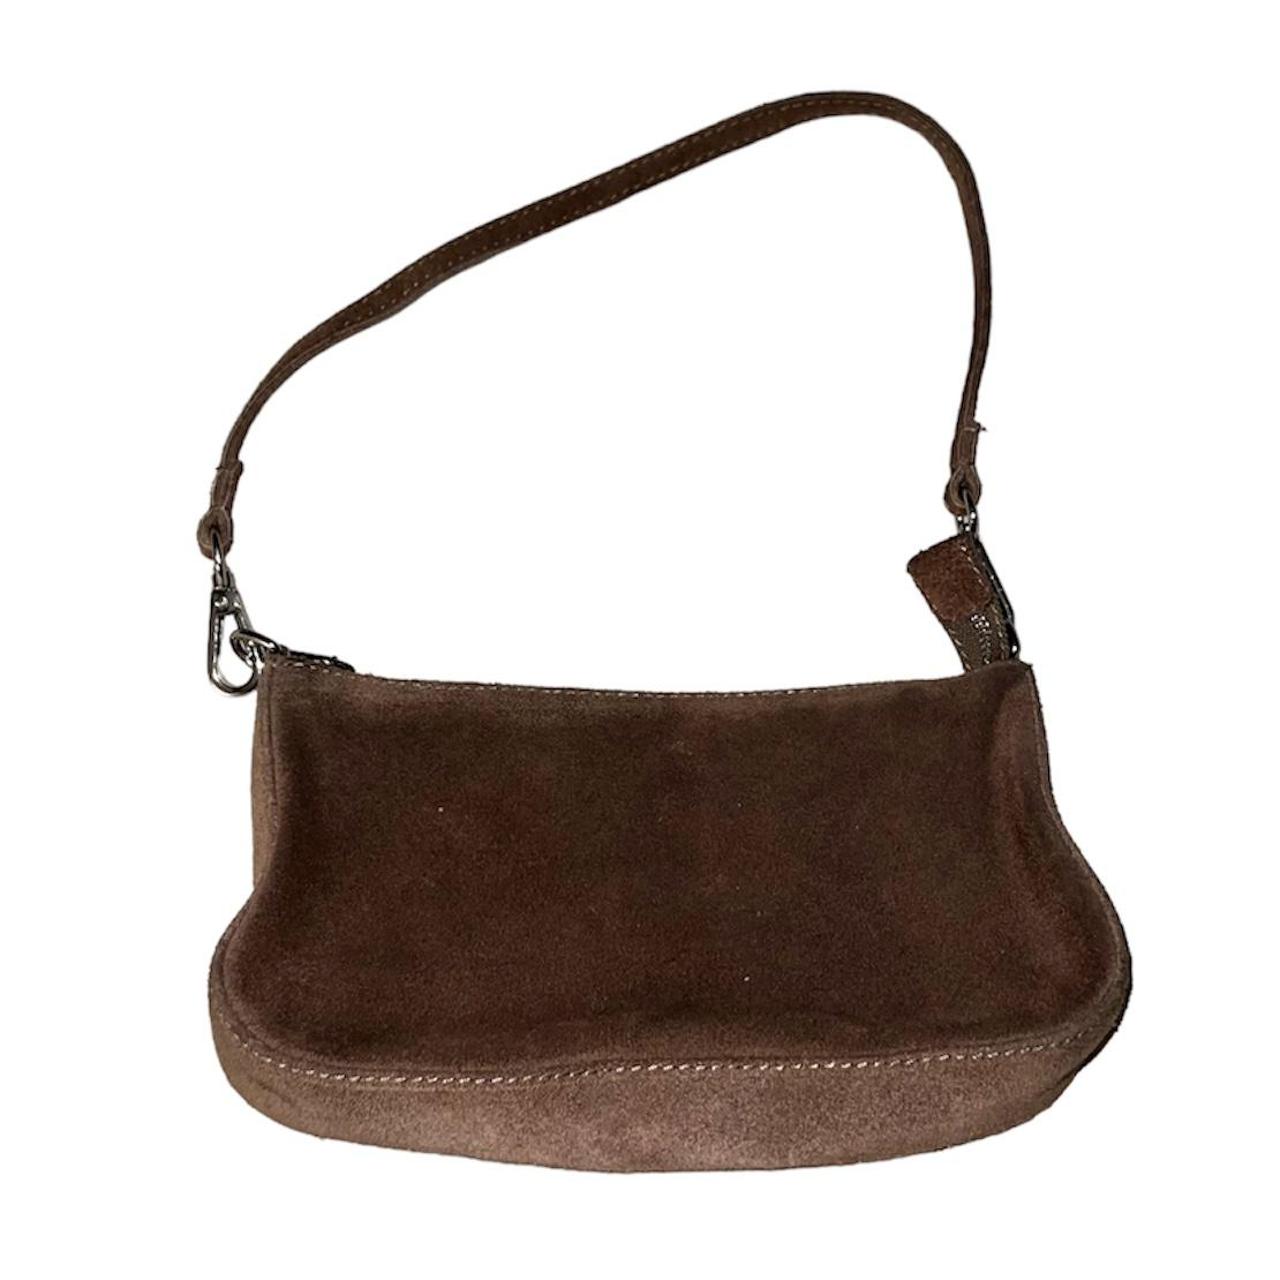 Brandy Melville Women's Khaki and Brown Bag